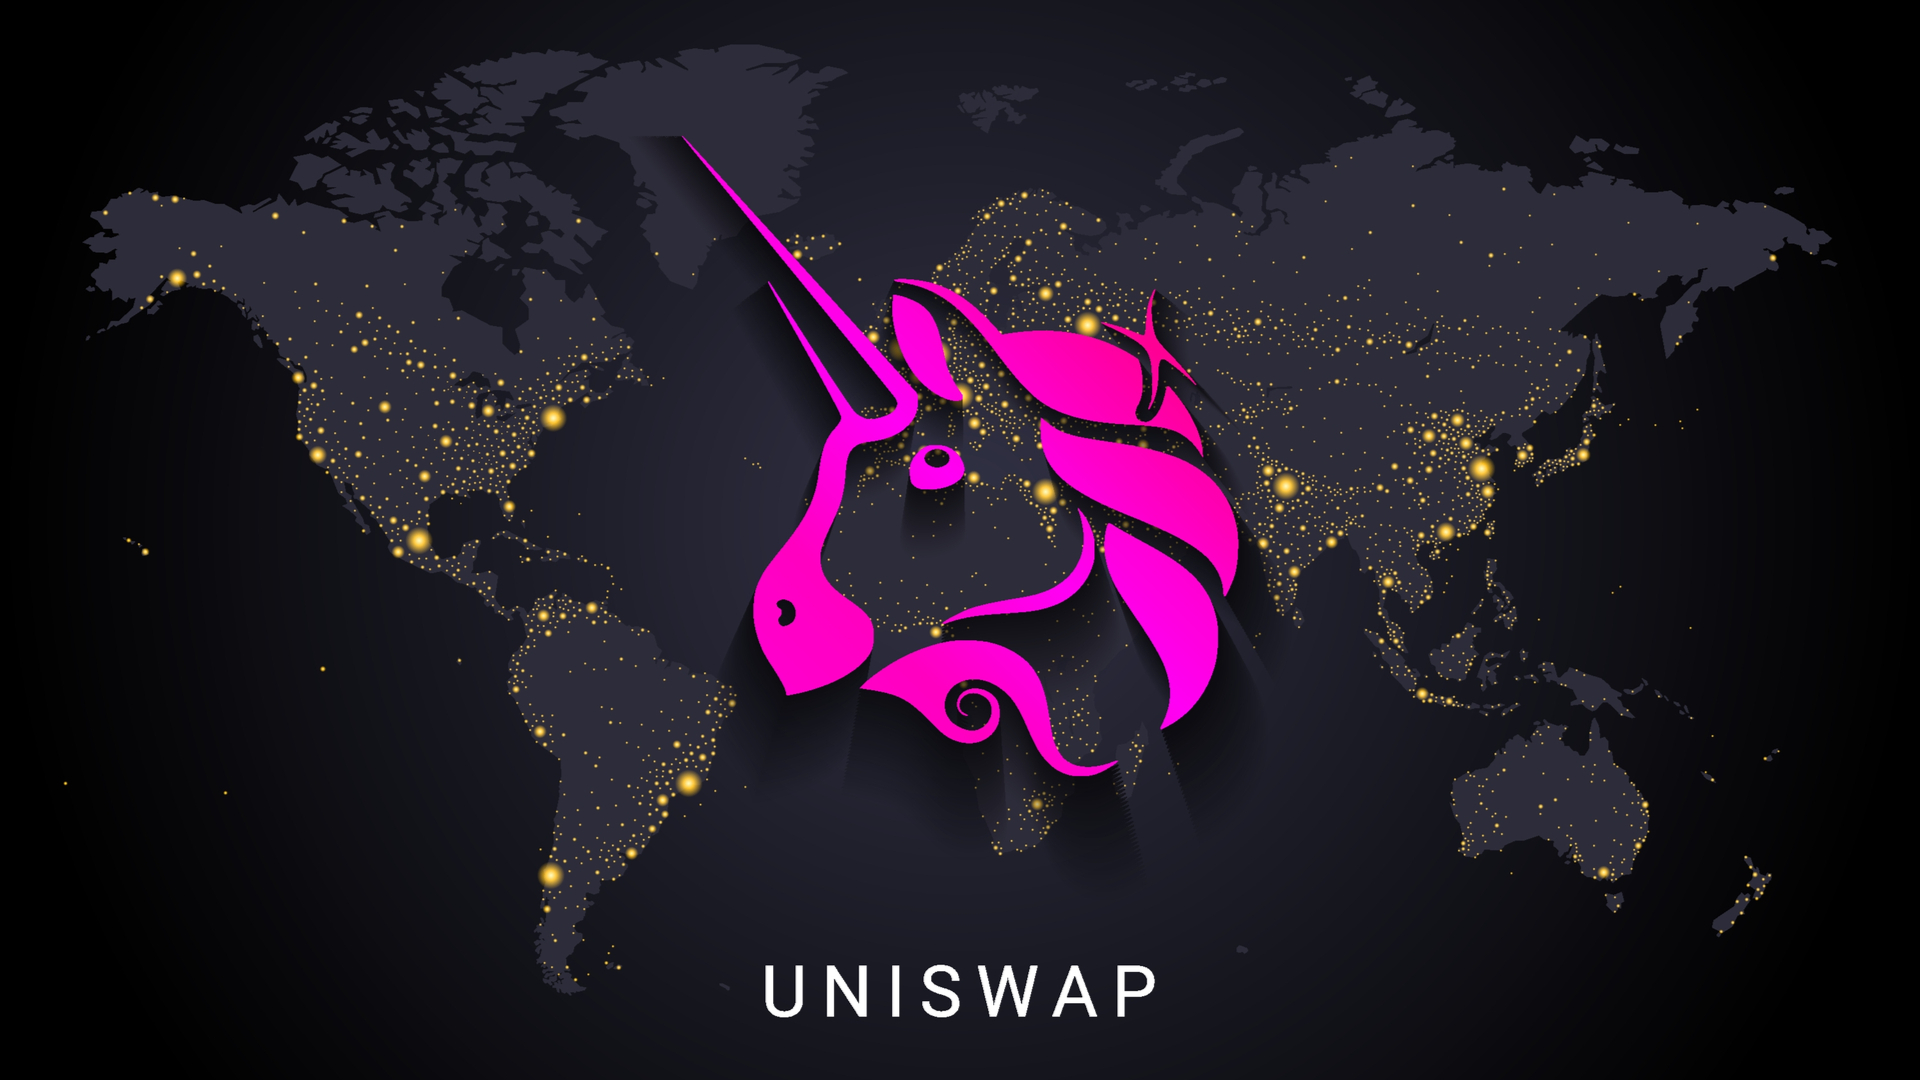 Uniswap joins BNB Chain